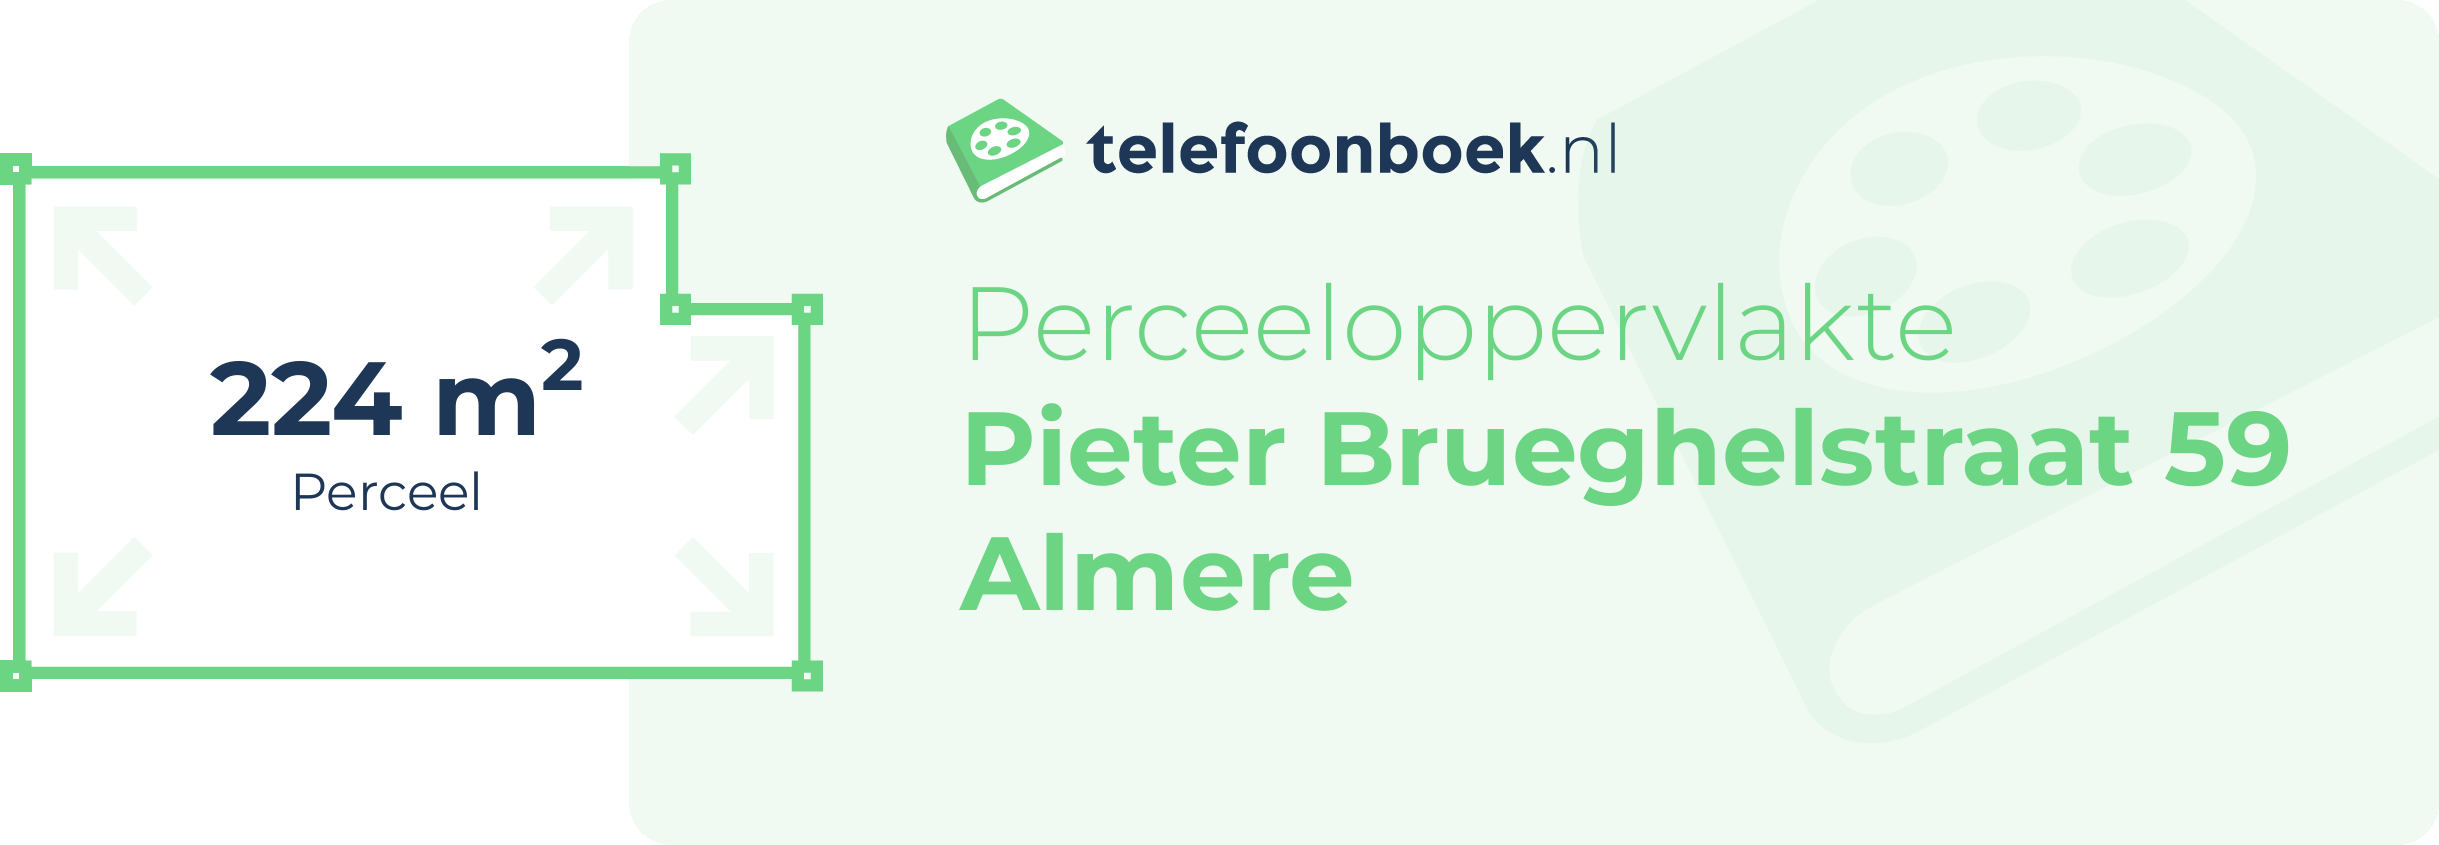 Perceeloppervlakte Pieter Brueghelstraat 59 Almere